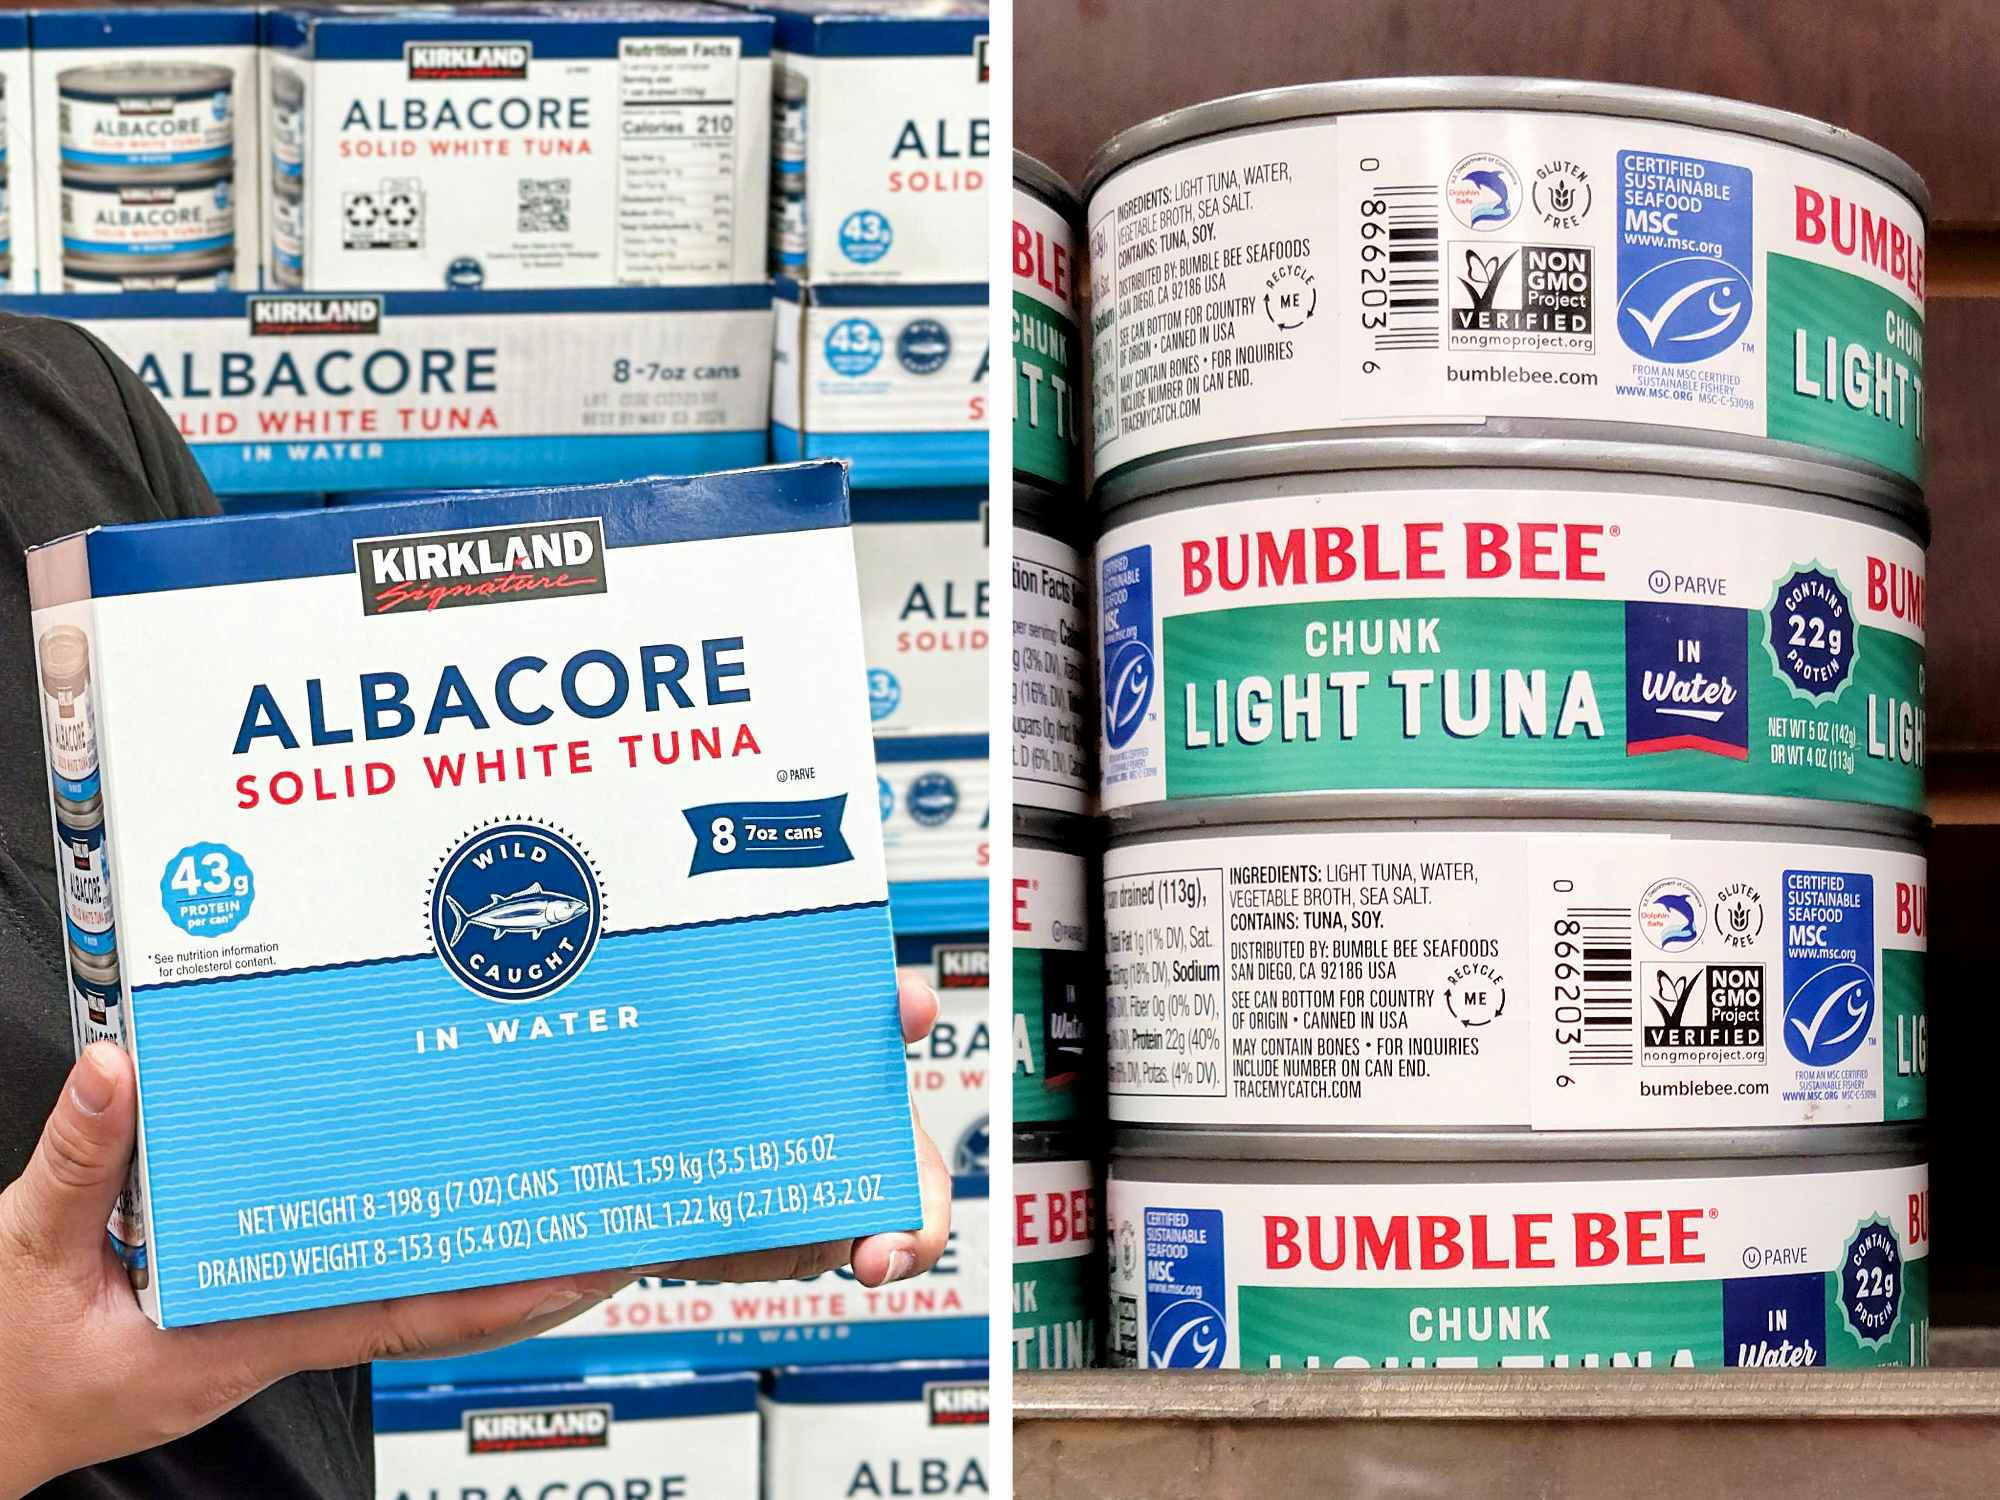 costco's kirkland vs bumblebee brand canned tuna price comparison